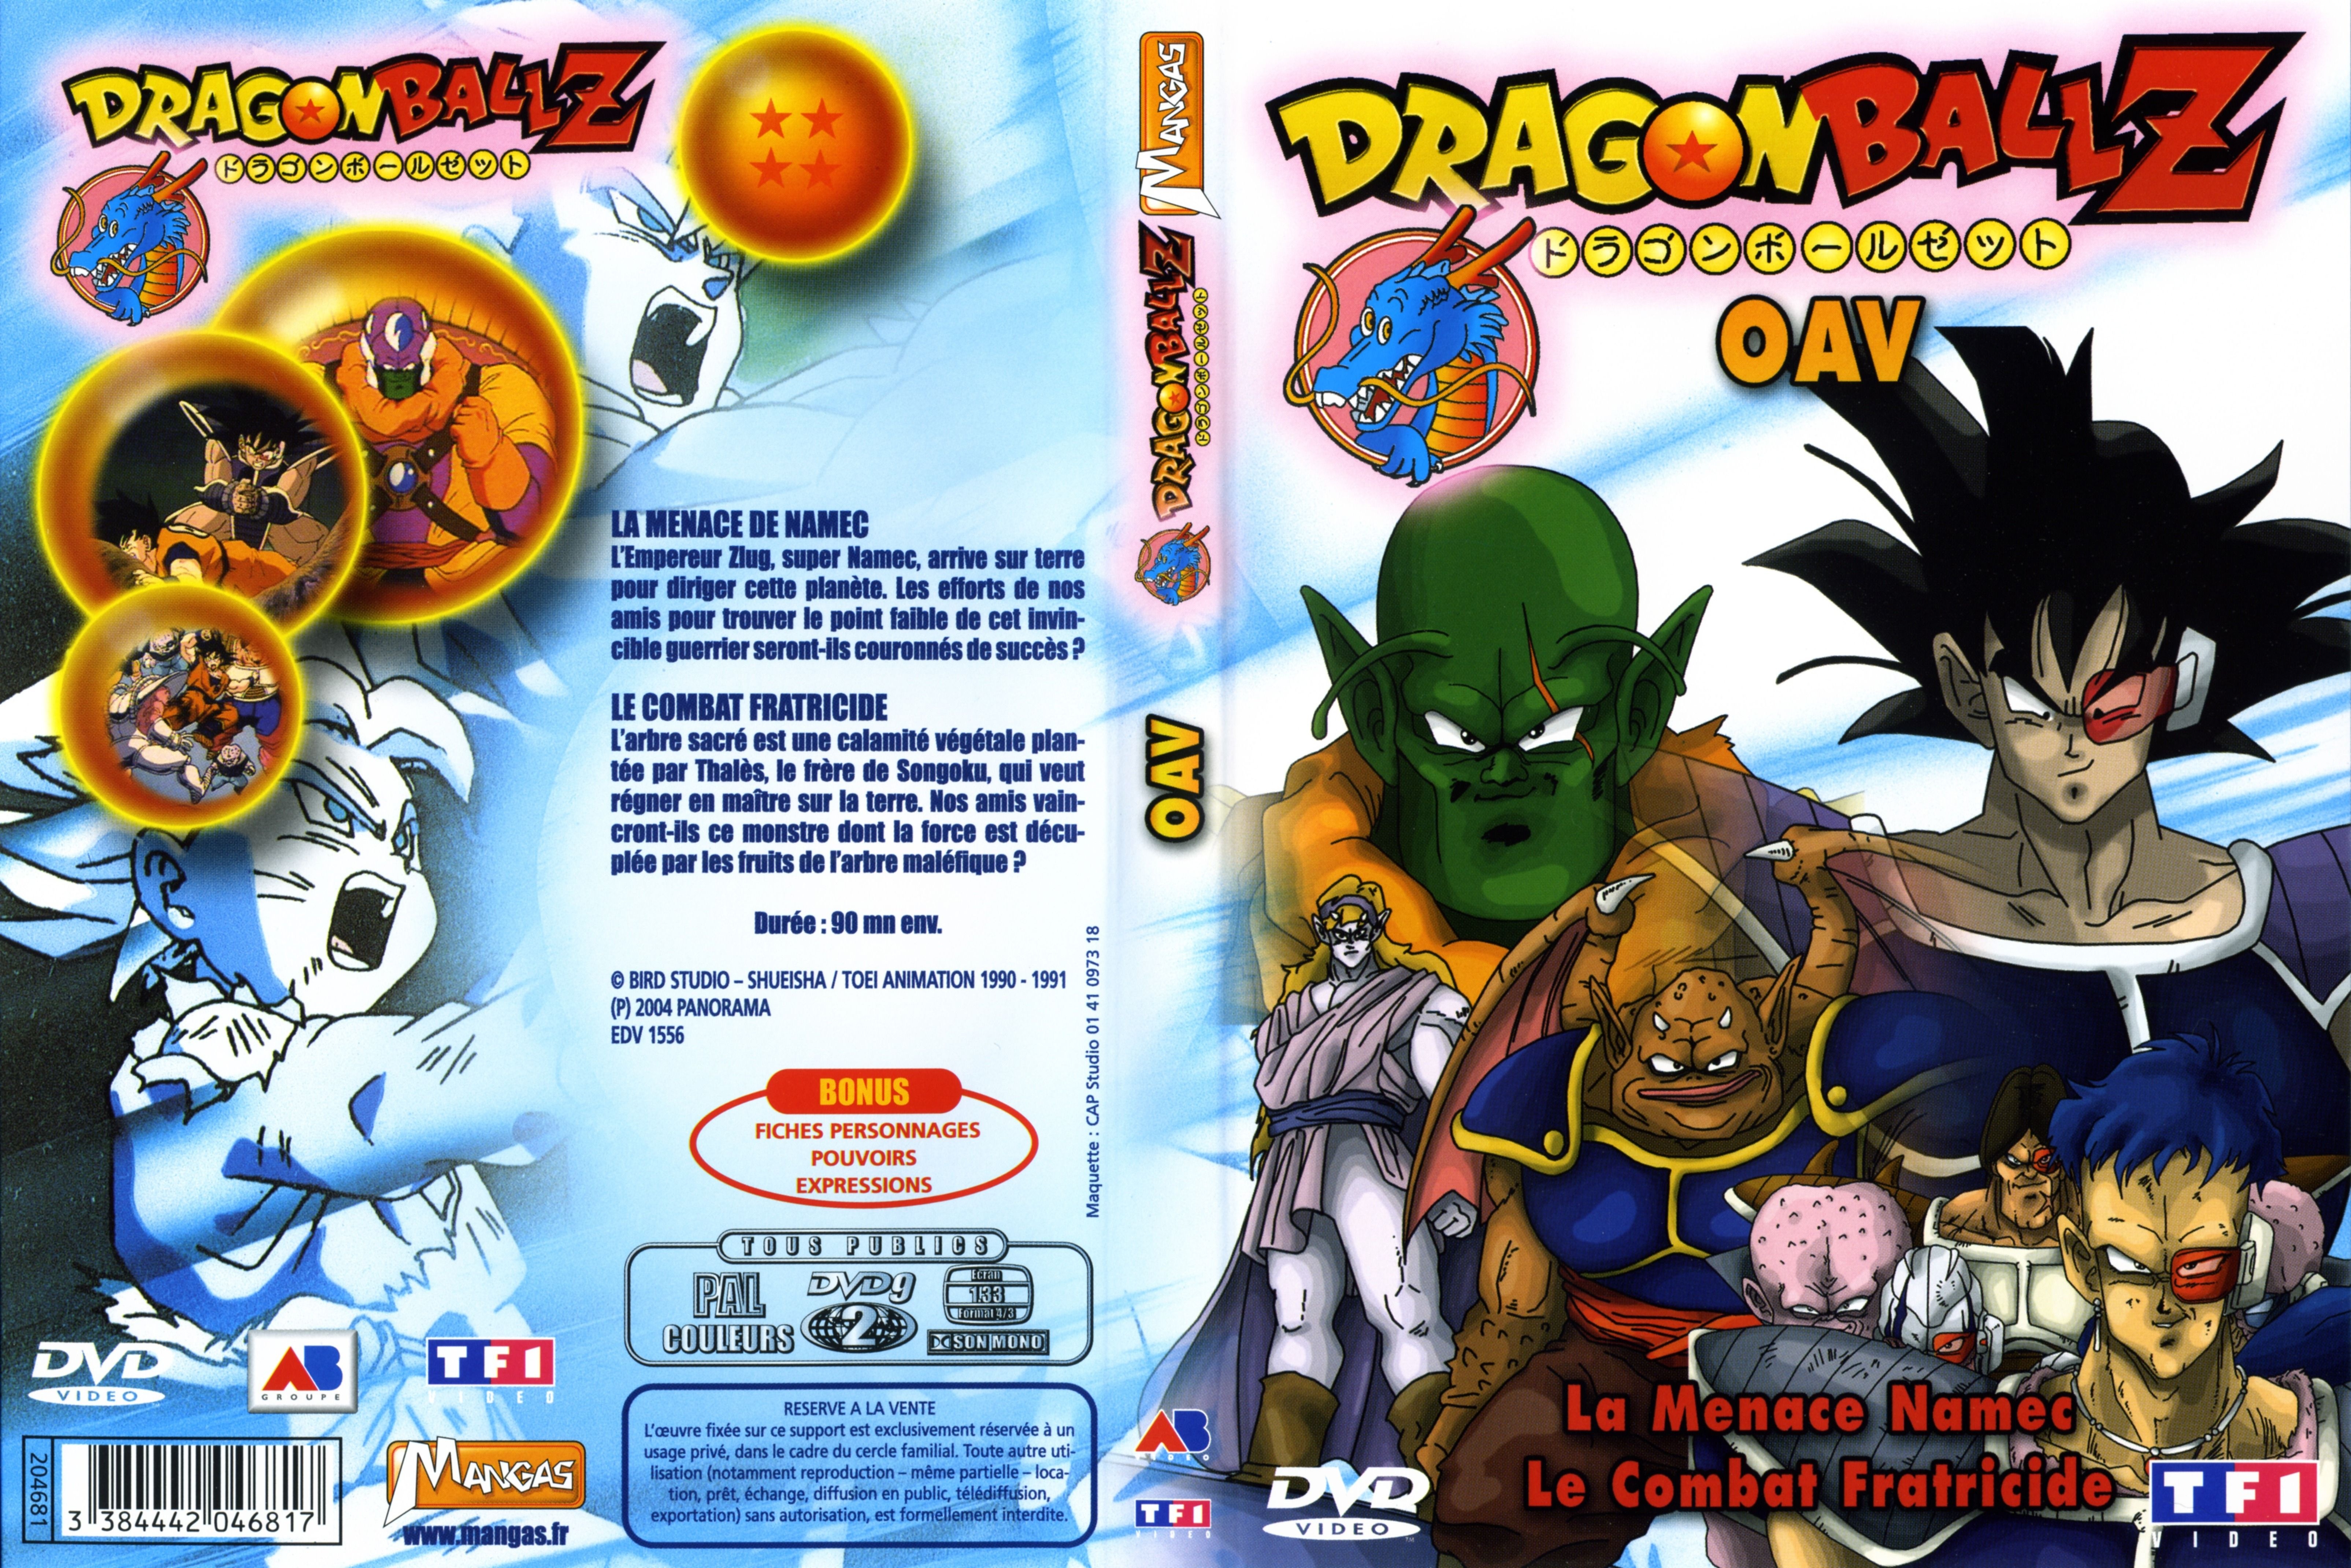 Jaquette DVD Dragon ball Z OAV 3-4